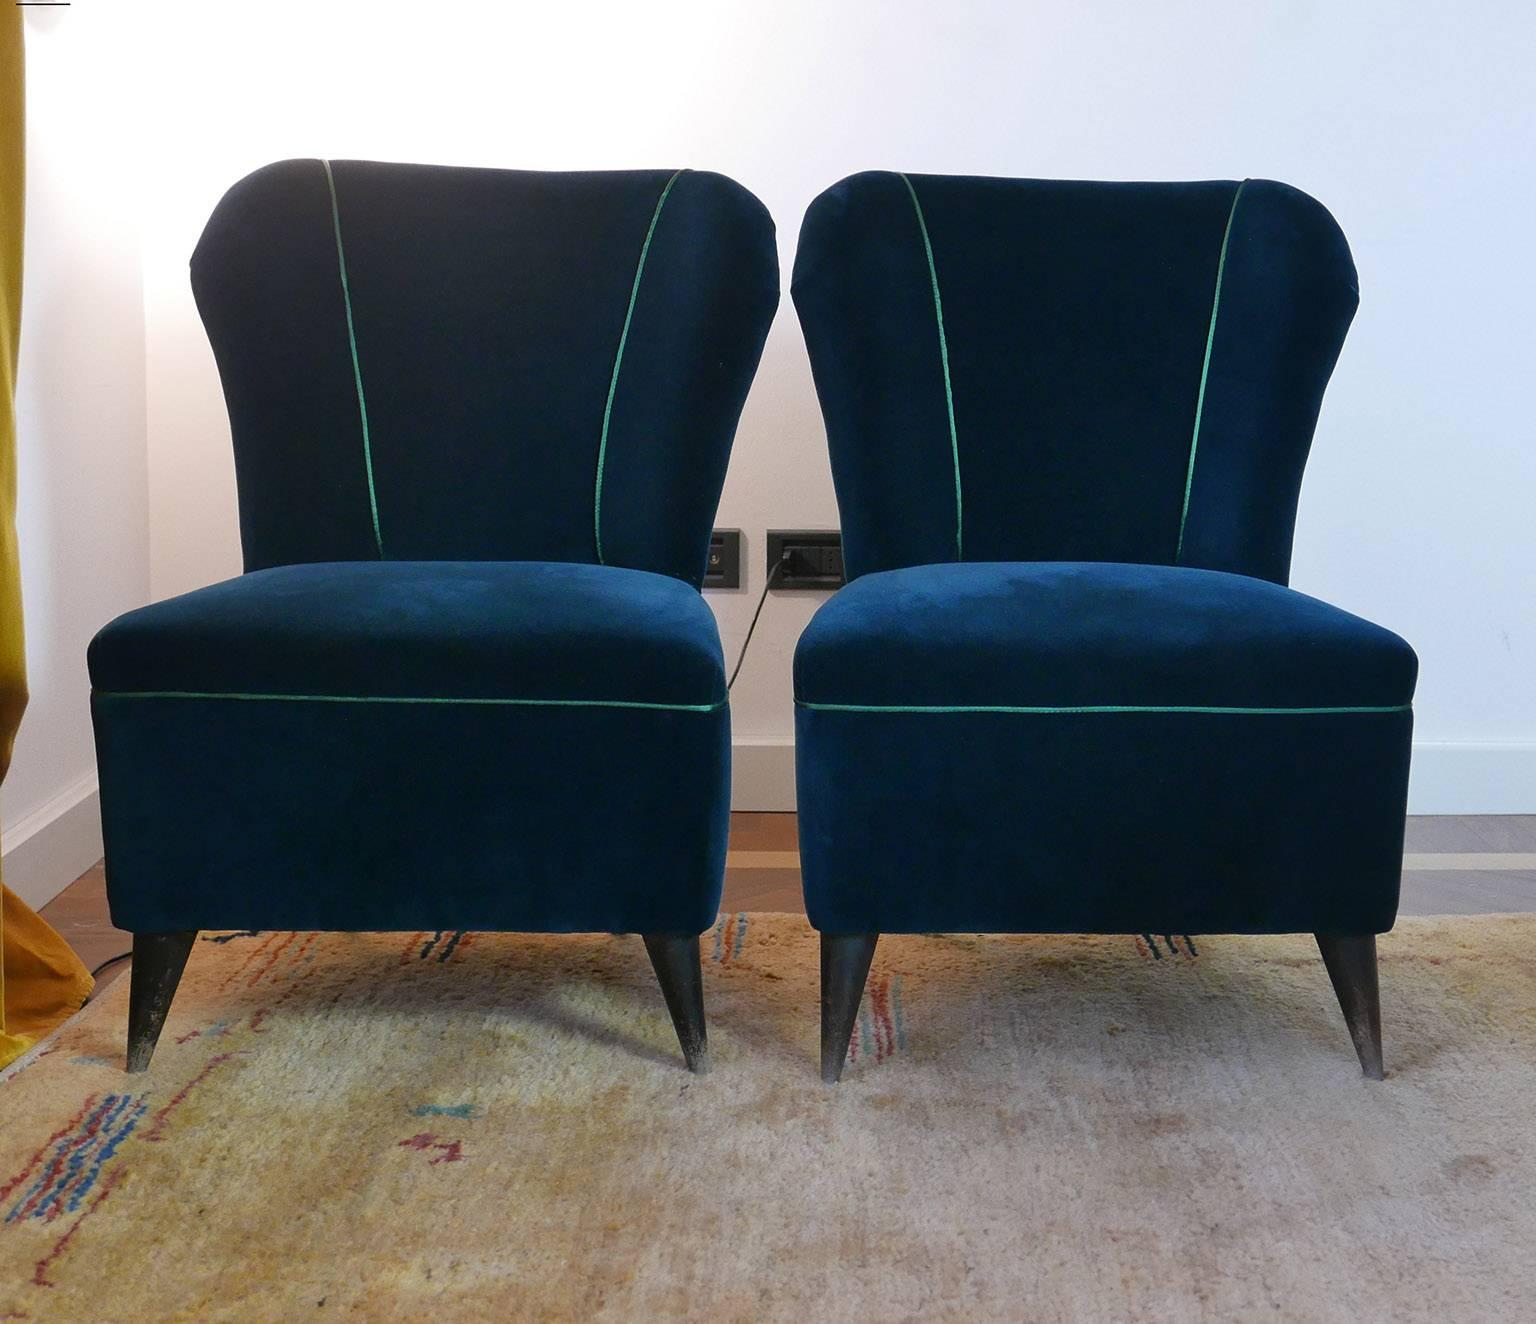 Pair of Italian Armchairs in Green Velvet by ISA Bergamo, 1950s For Sale 2